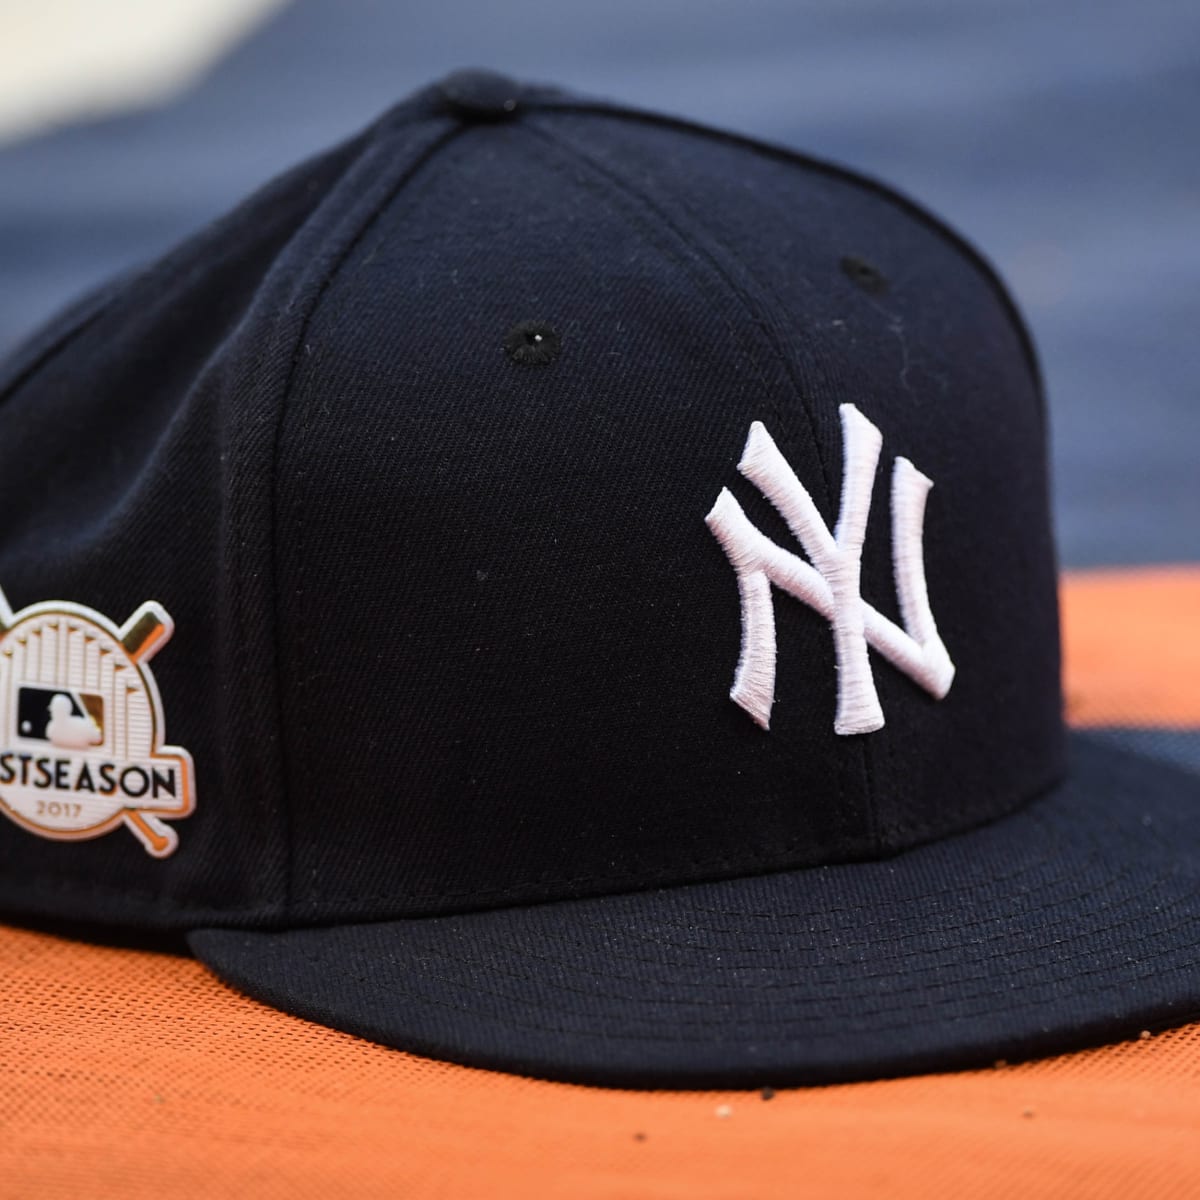 New York Yankees Bat Boy Scolded Over His Hair Sparks Debate